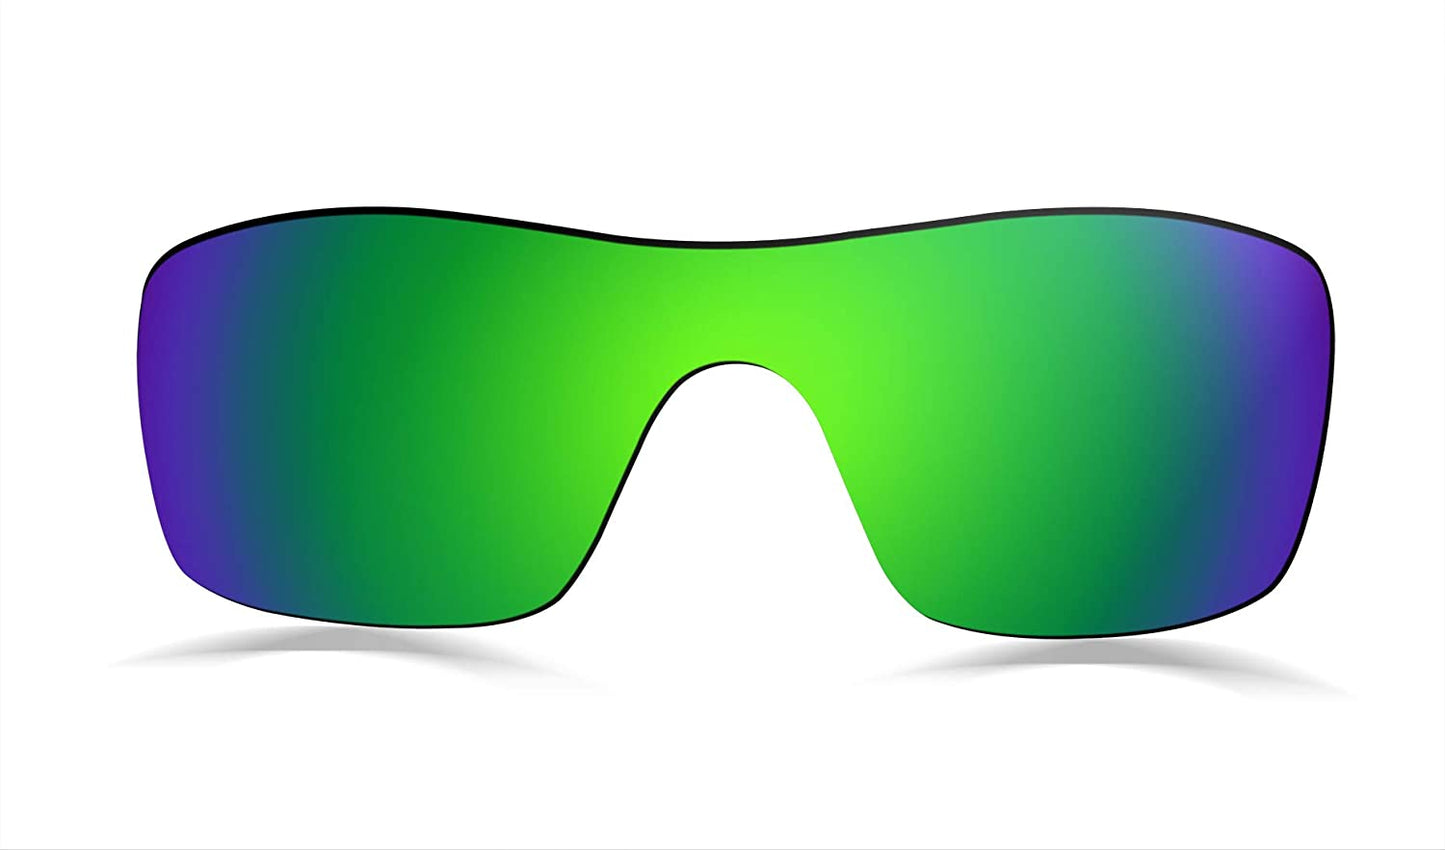 Prizo Polarized Replacement Lenses for Oakley Batwolf Sunglasses (Jade Iridium)